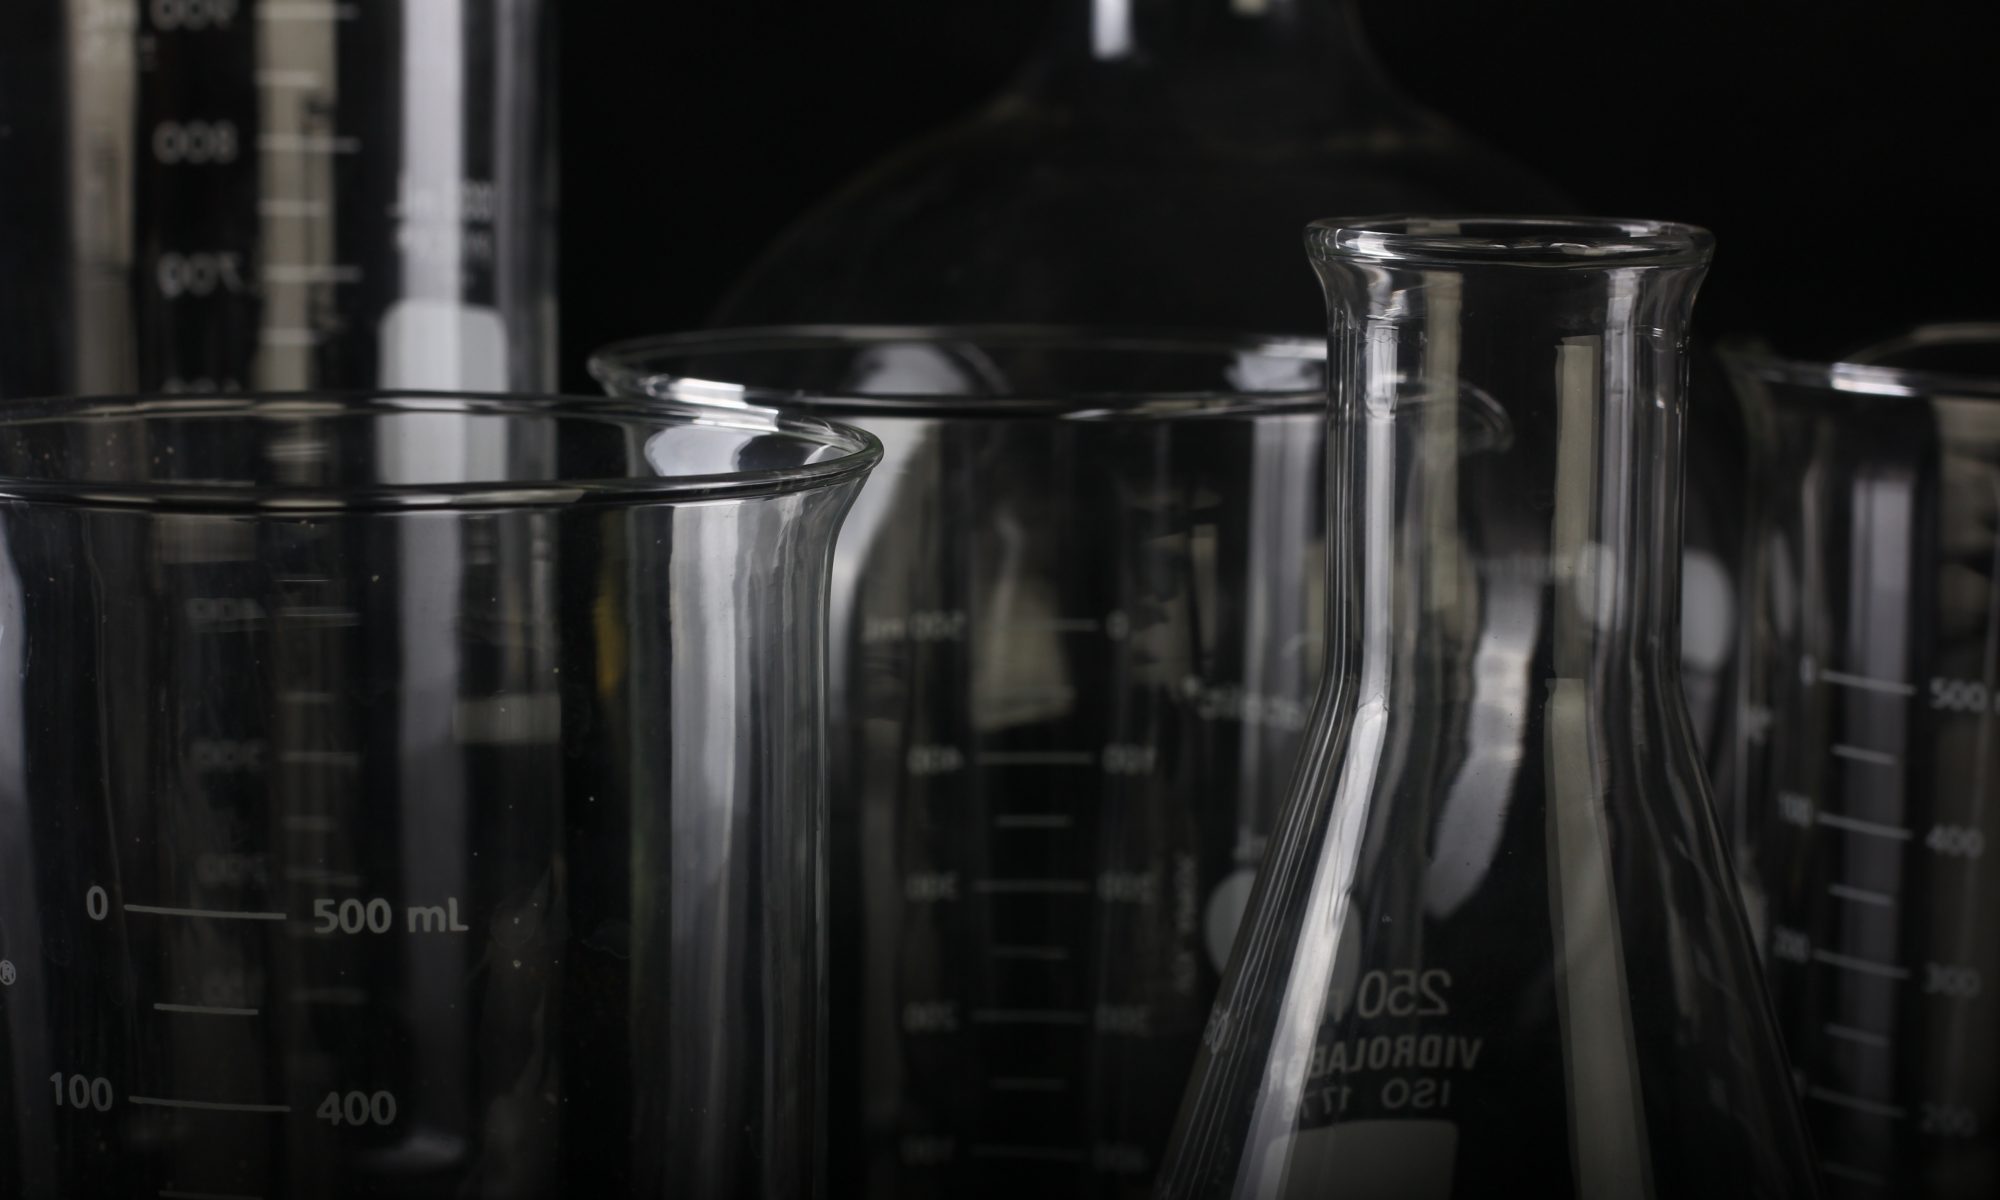 Chemistry beakers